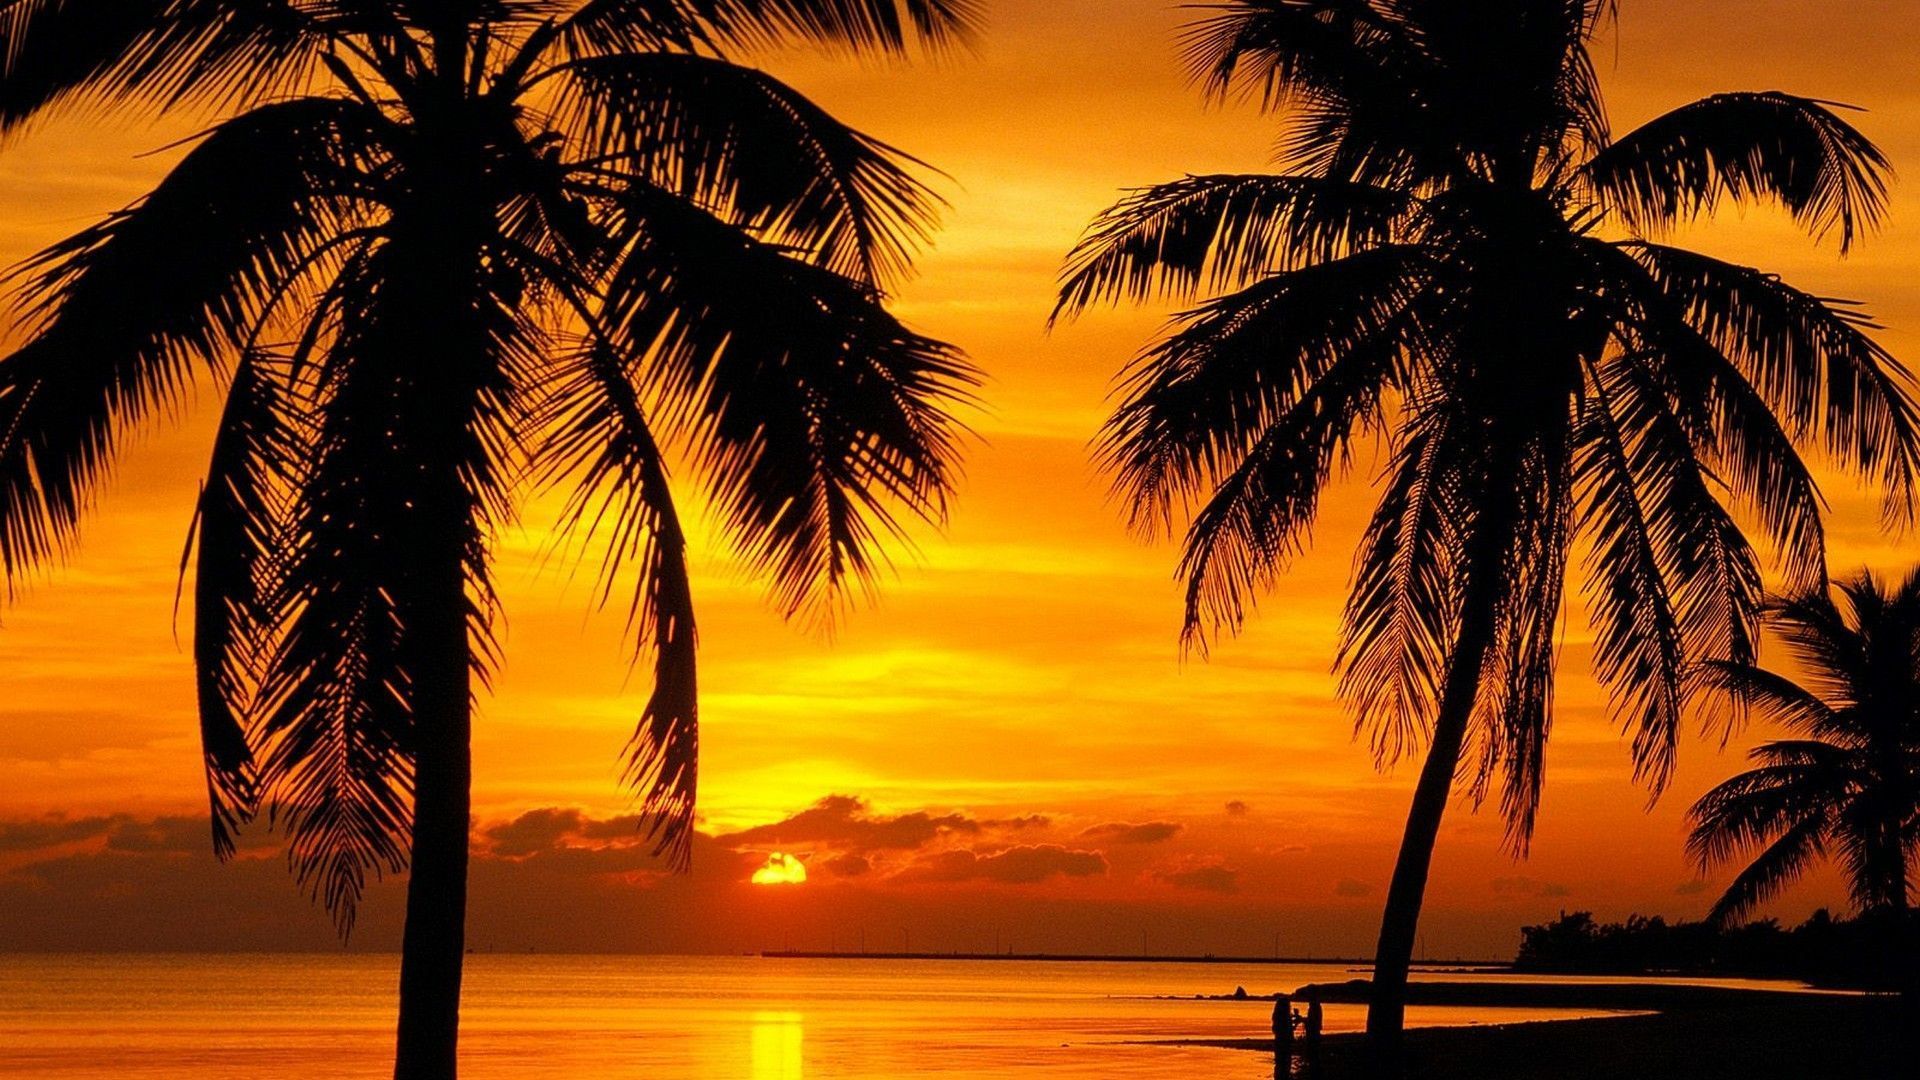 Key West Sunset wallpaper 246537